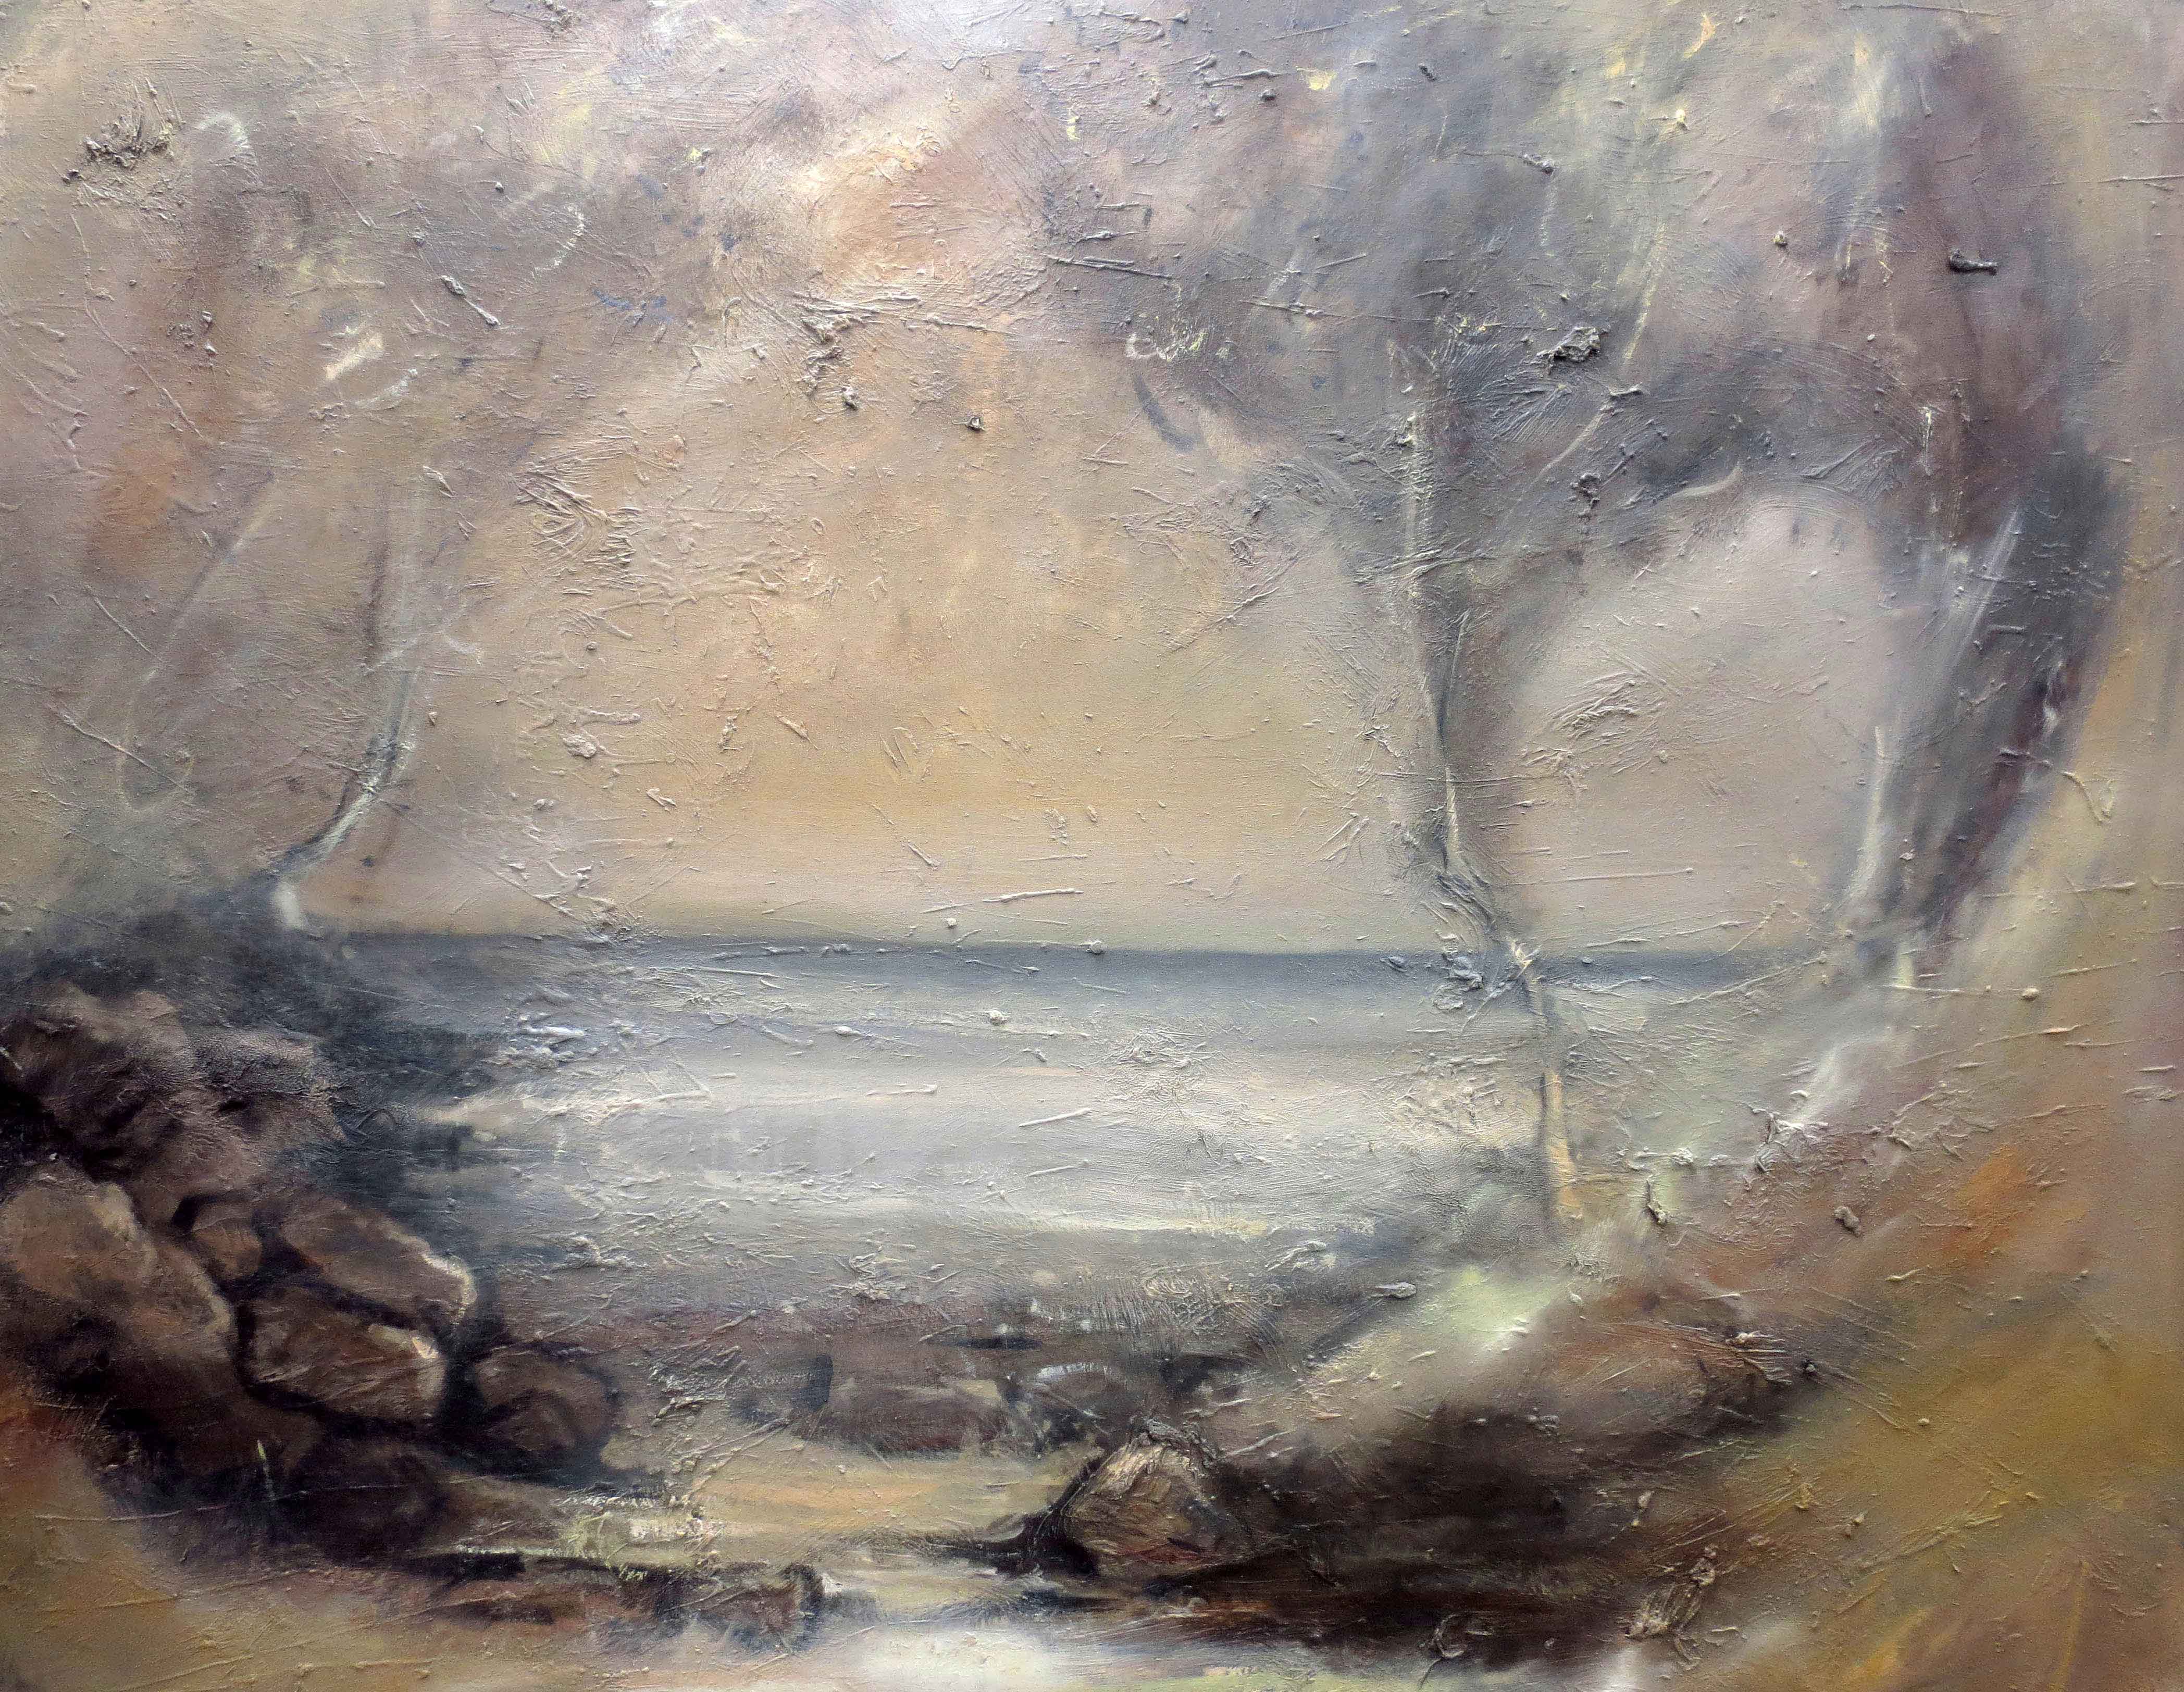 'The River Flows', oil on canvas, 122cm x 152cm,£4200